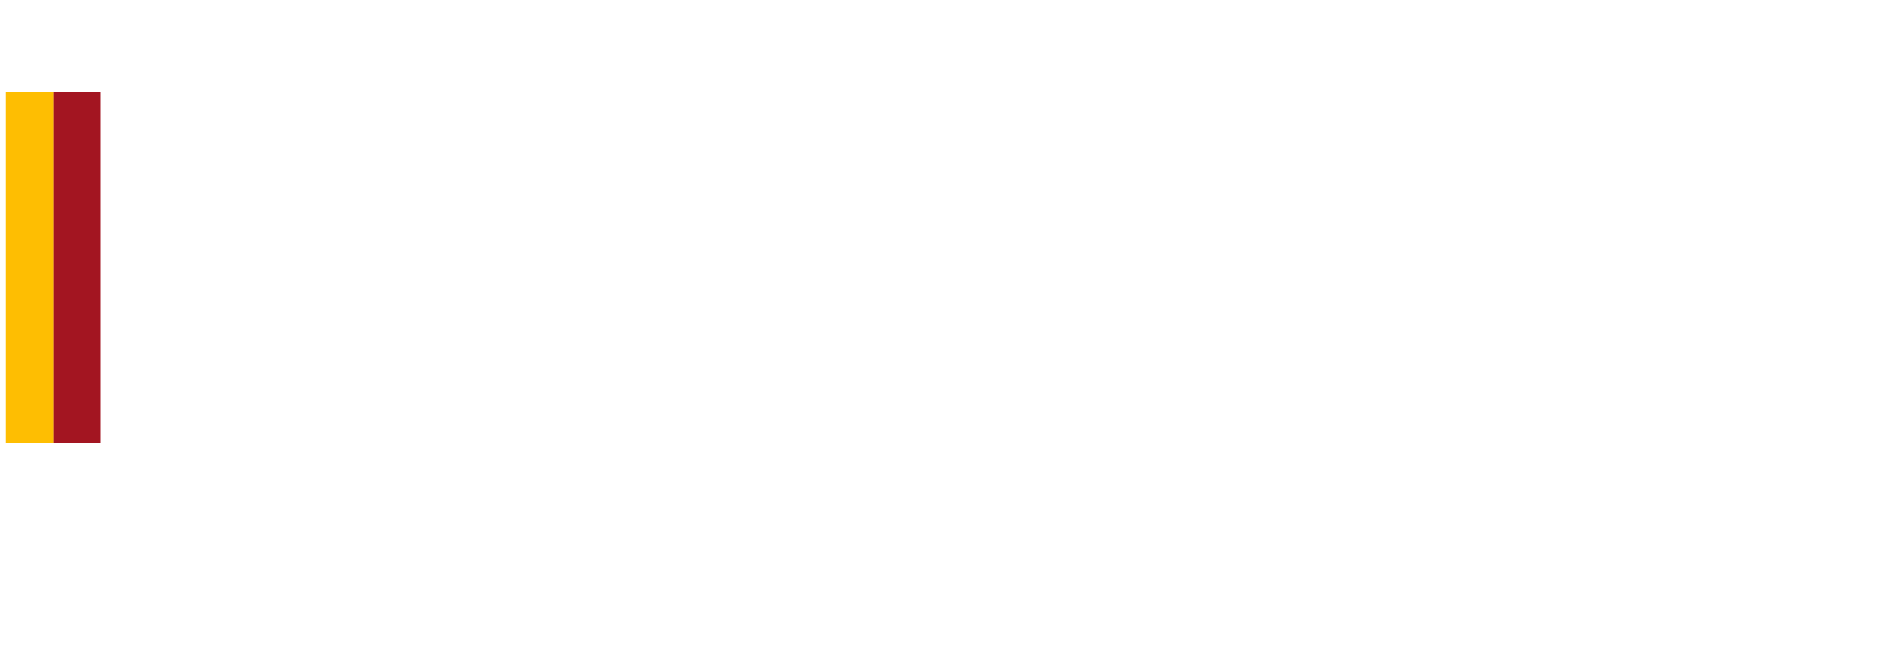 Meyzer Group